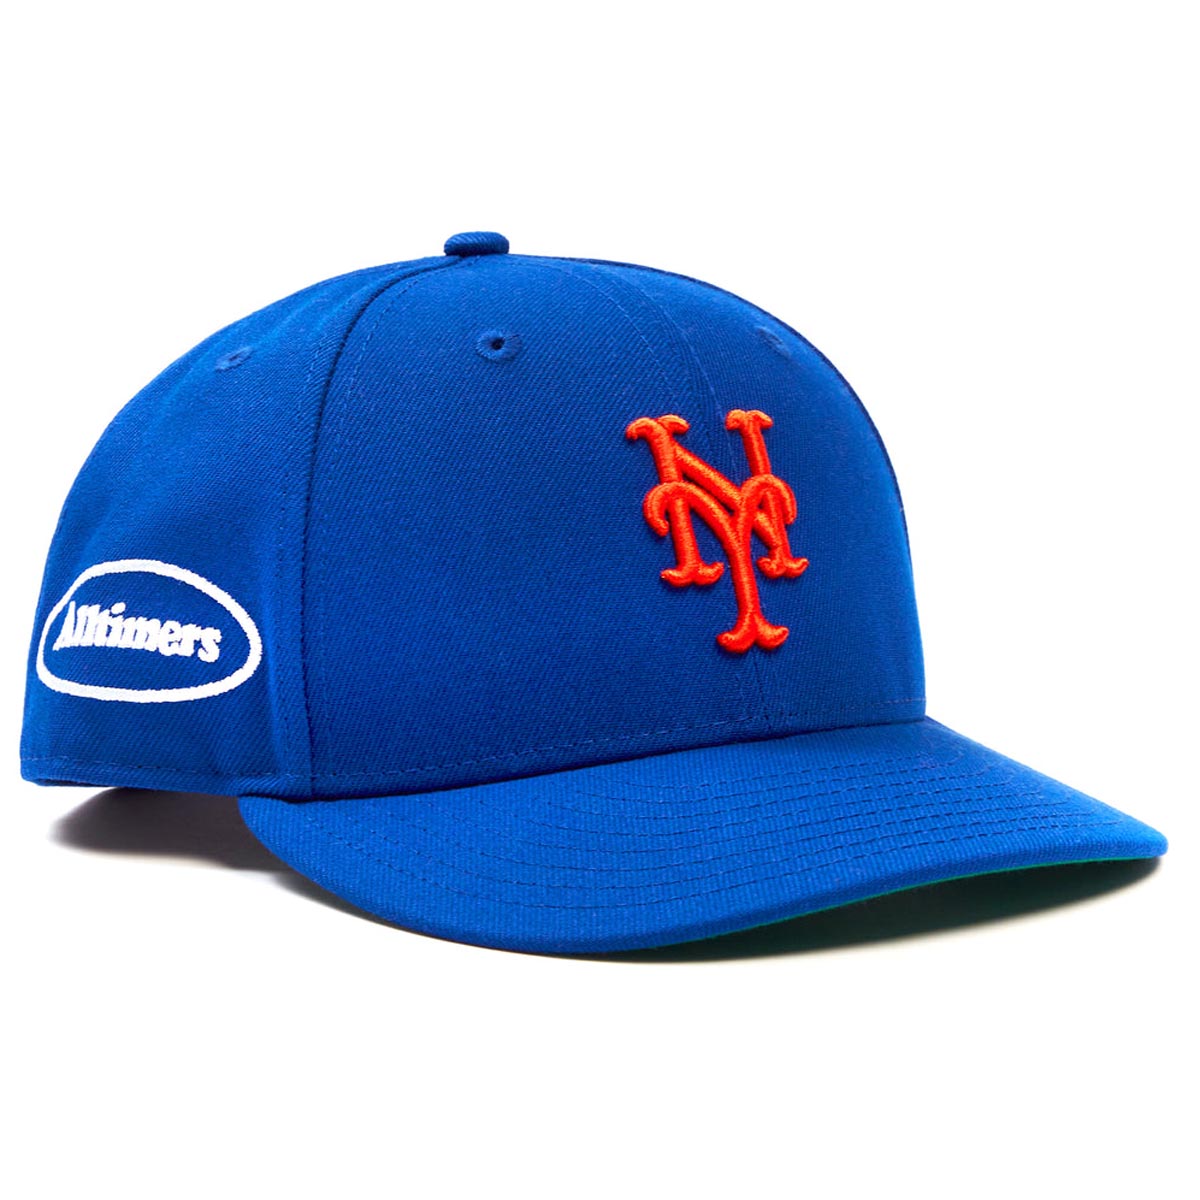 Alltimers x New Era Mets Hat - Royal image 2